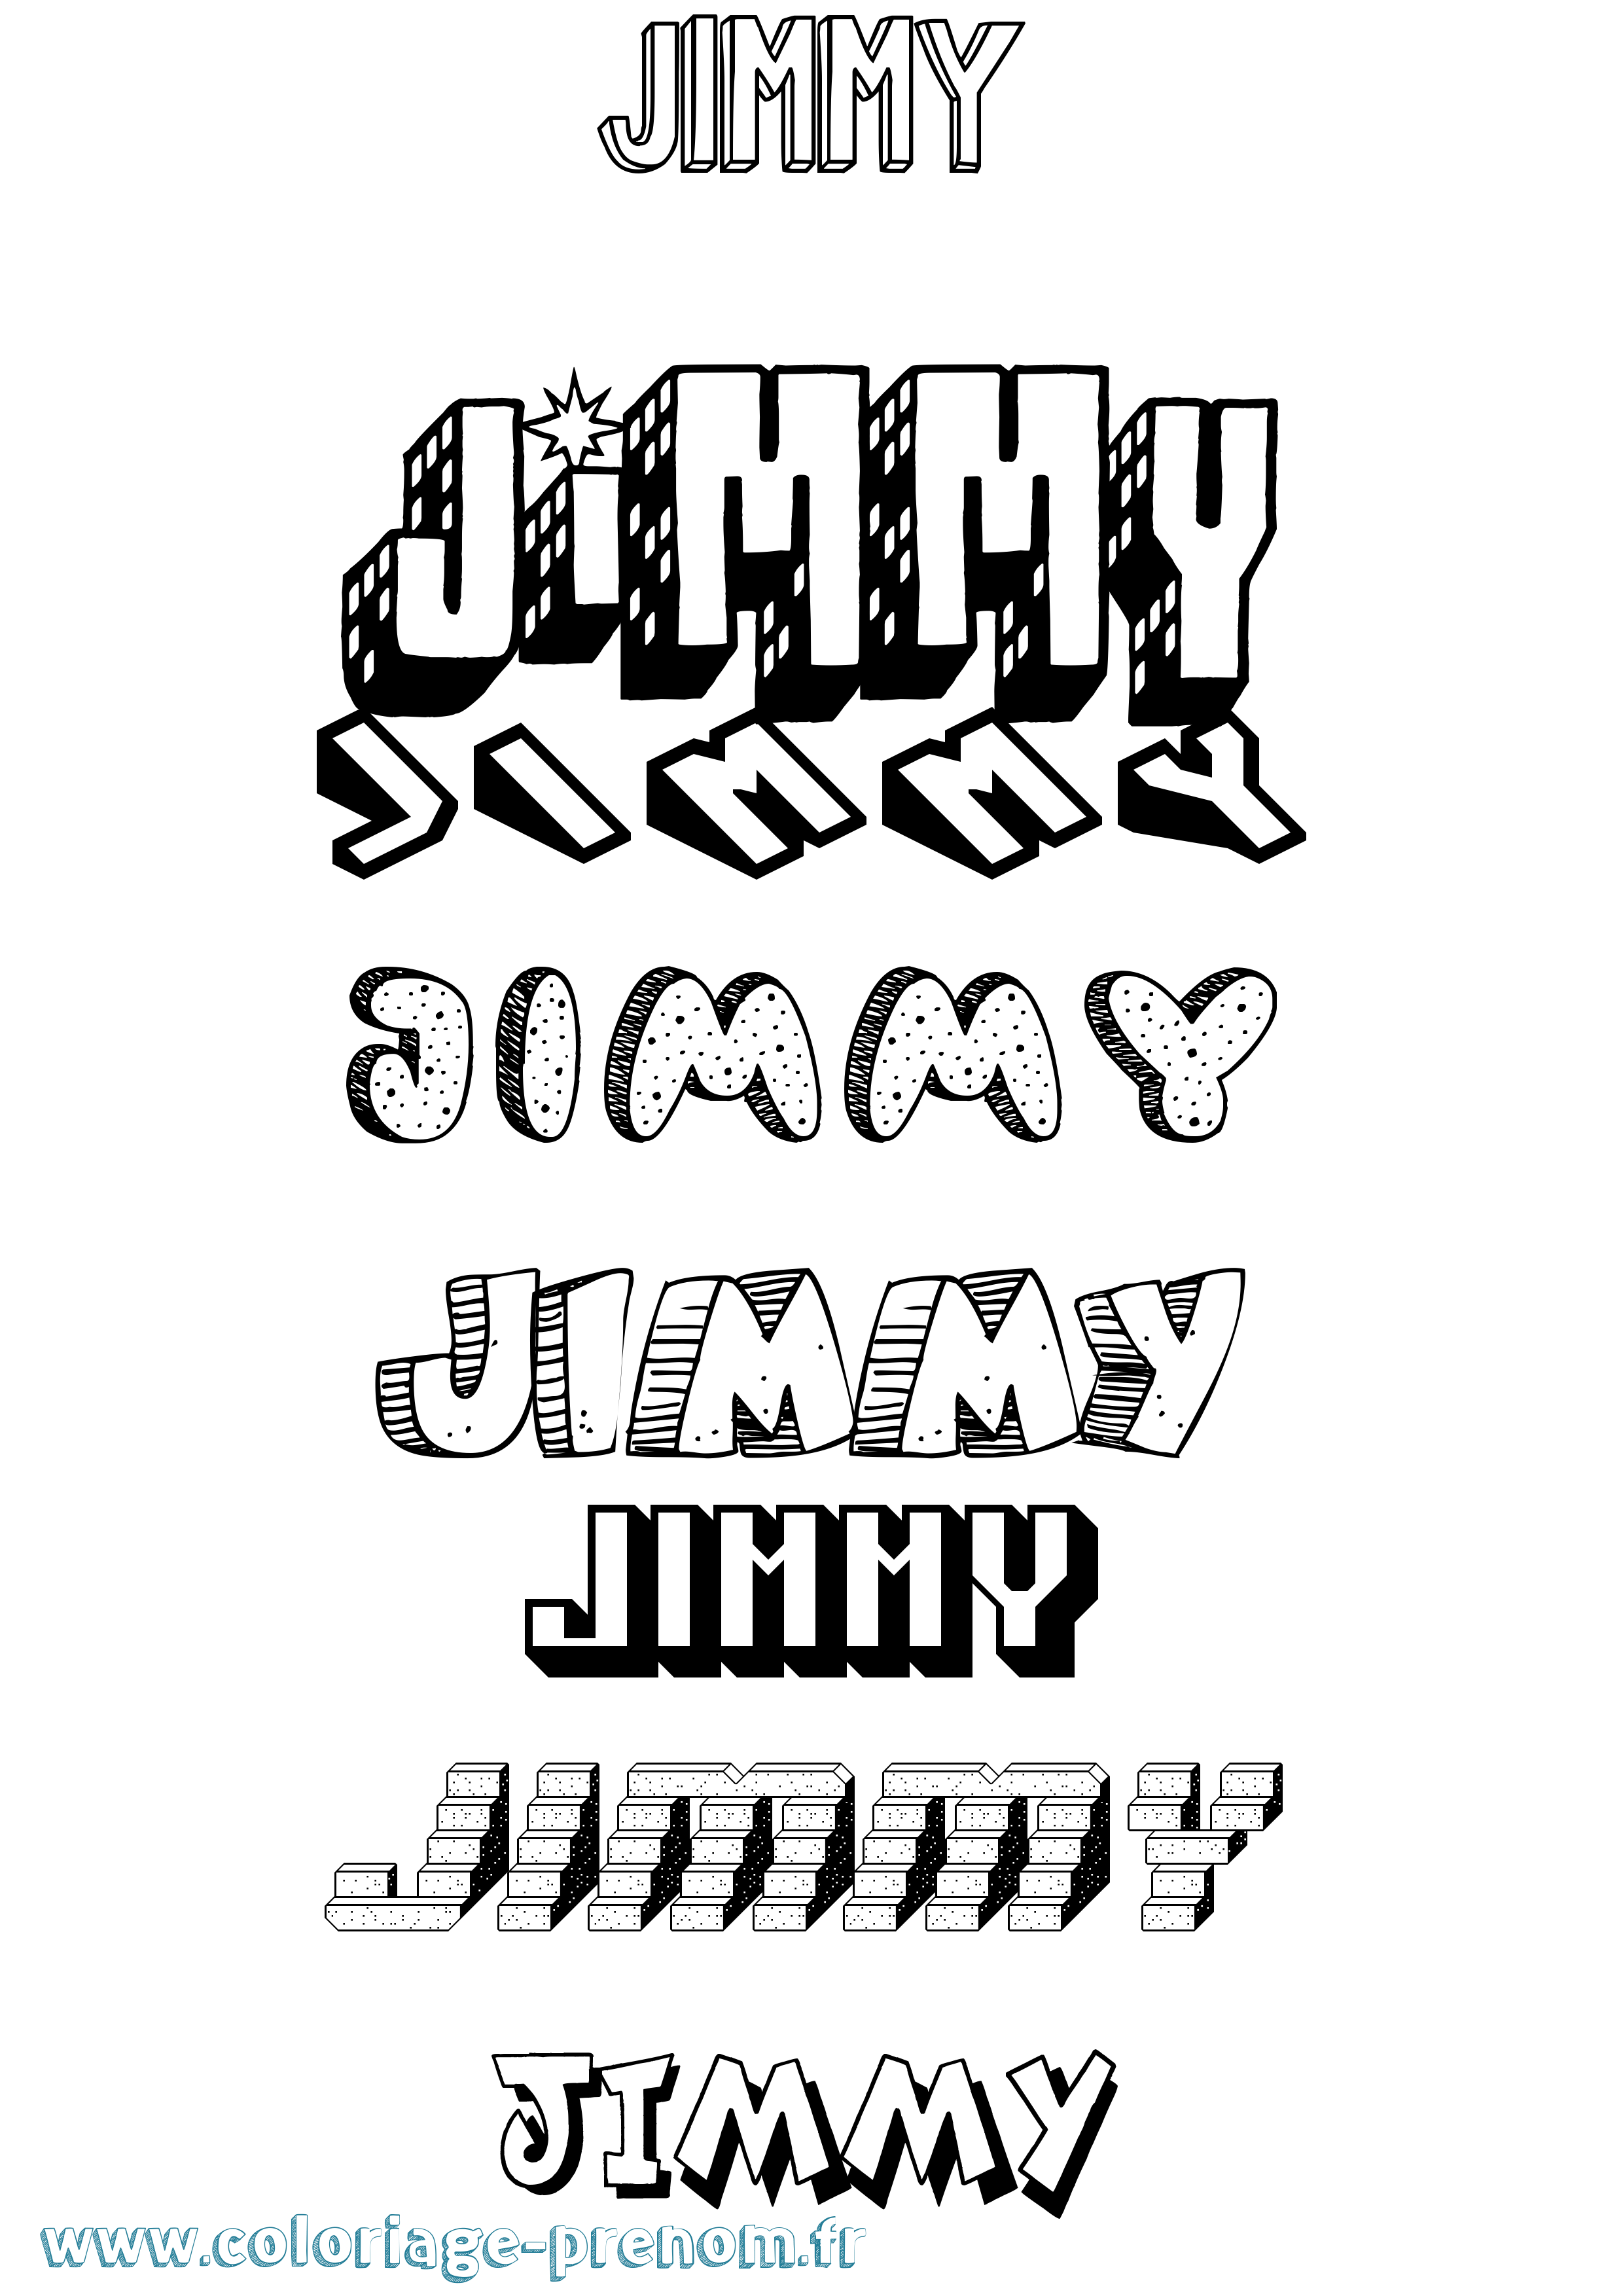 Coloriage prénom Jimmy